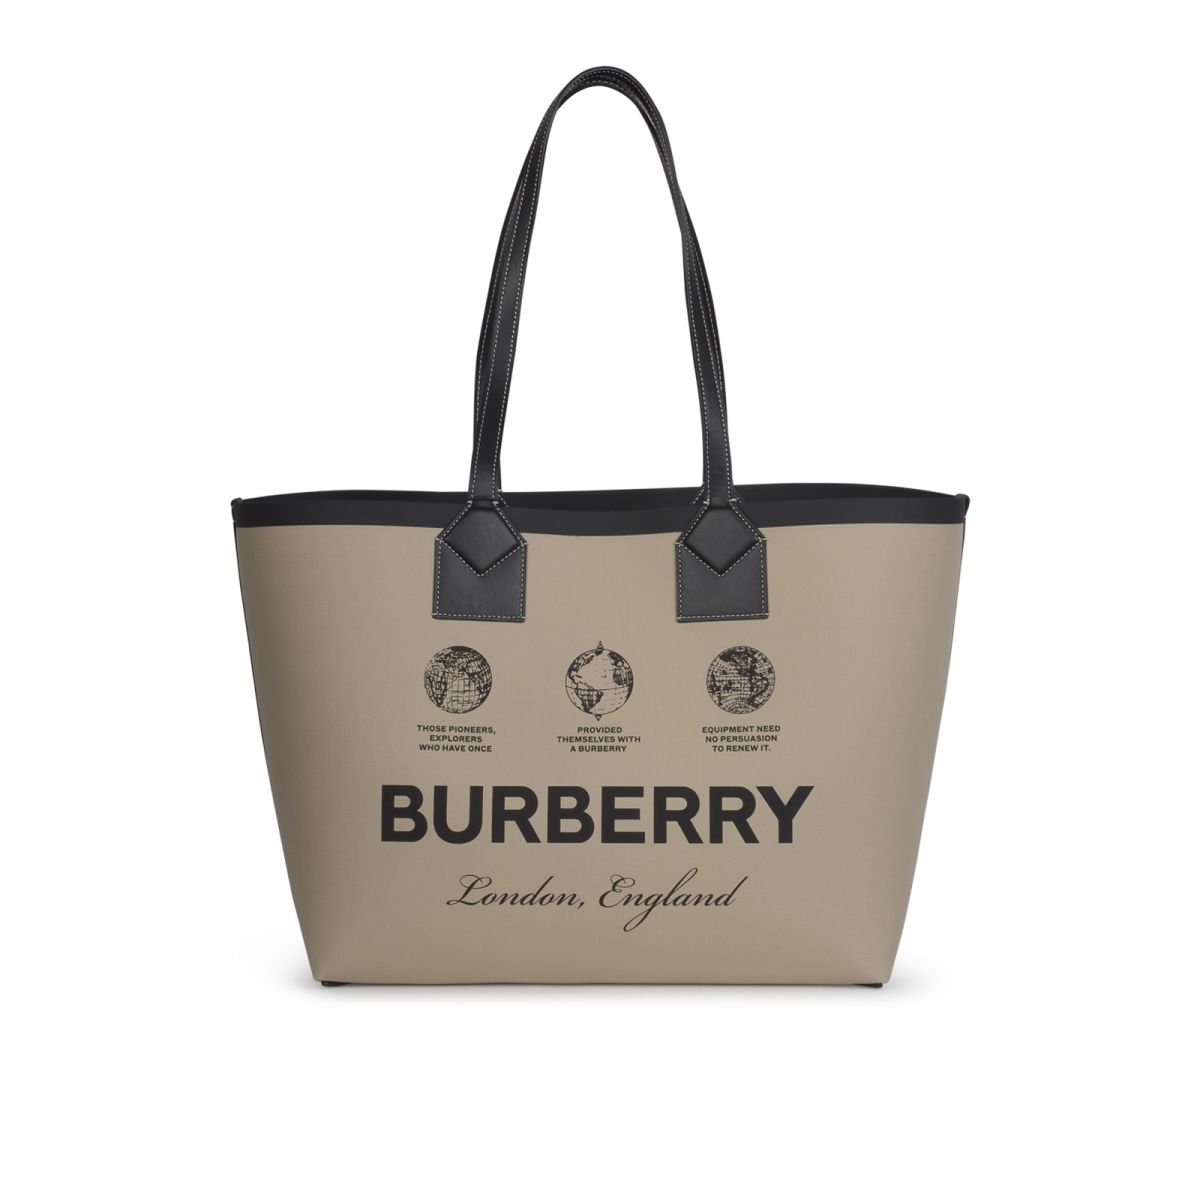 BURBERRY - Medium Heritage tote bag